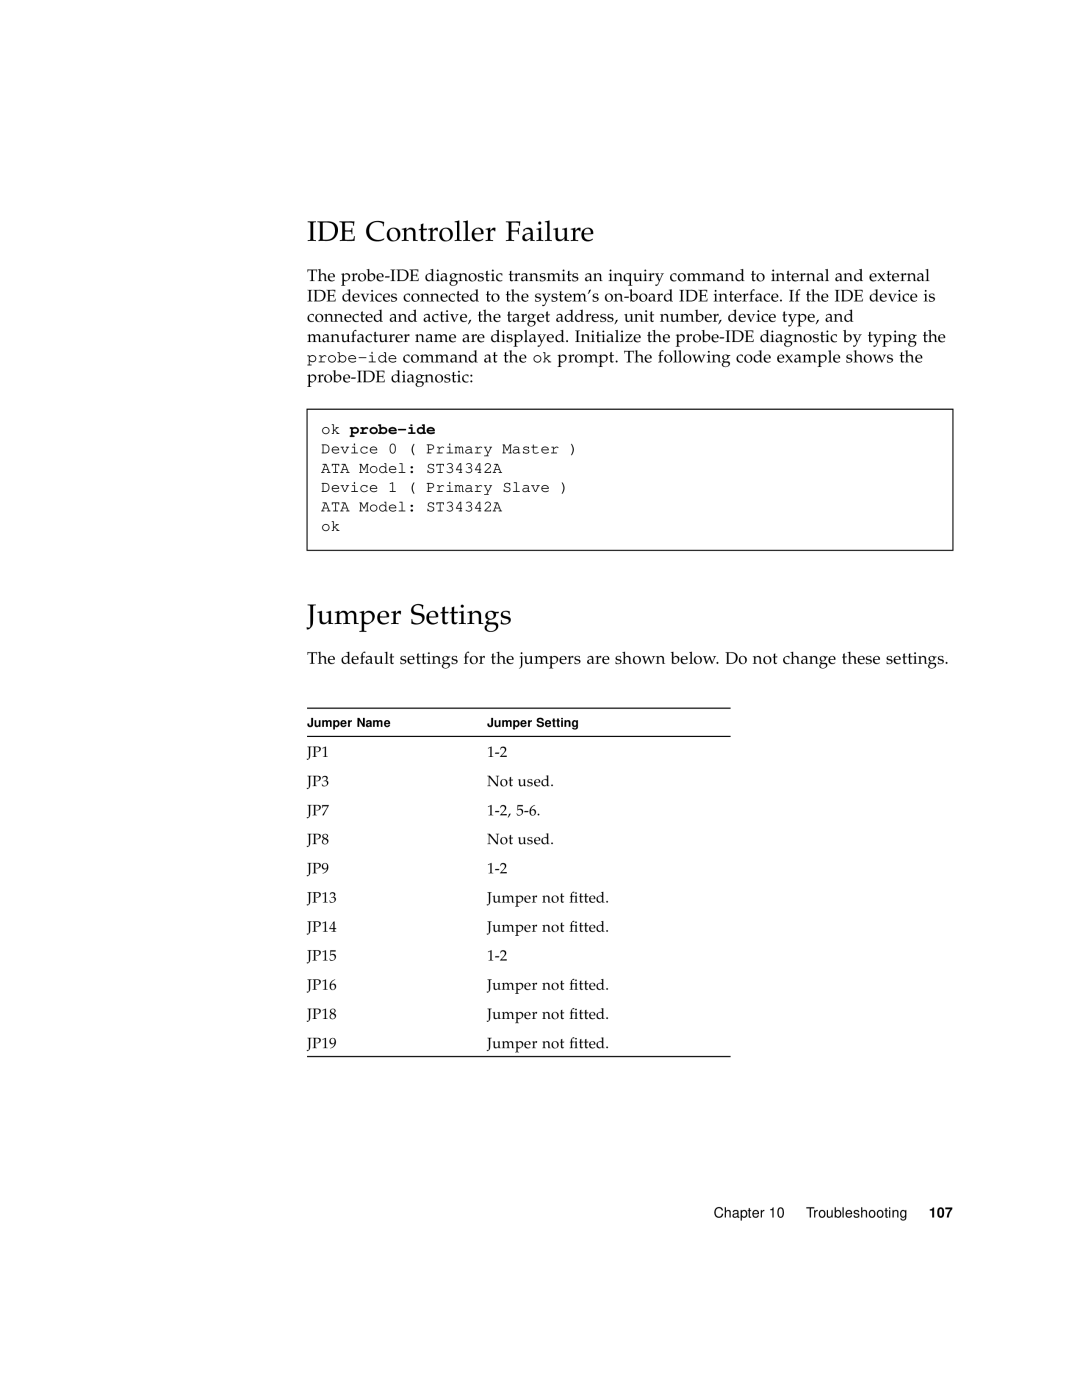 Sun Microsystems Sun Fire V100 manual IDE Controller Failure, Jumper Settings, ok probe-ide 